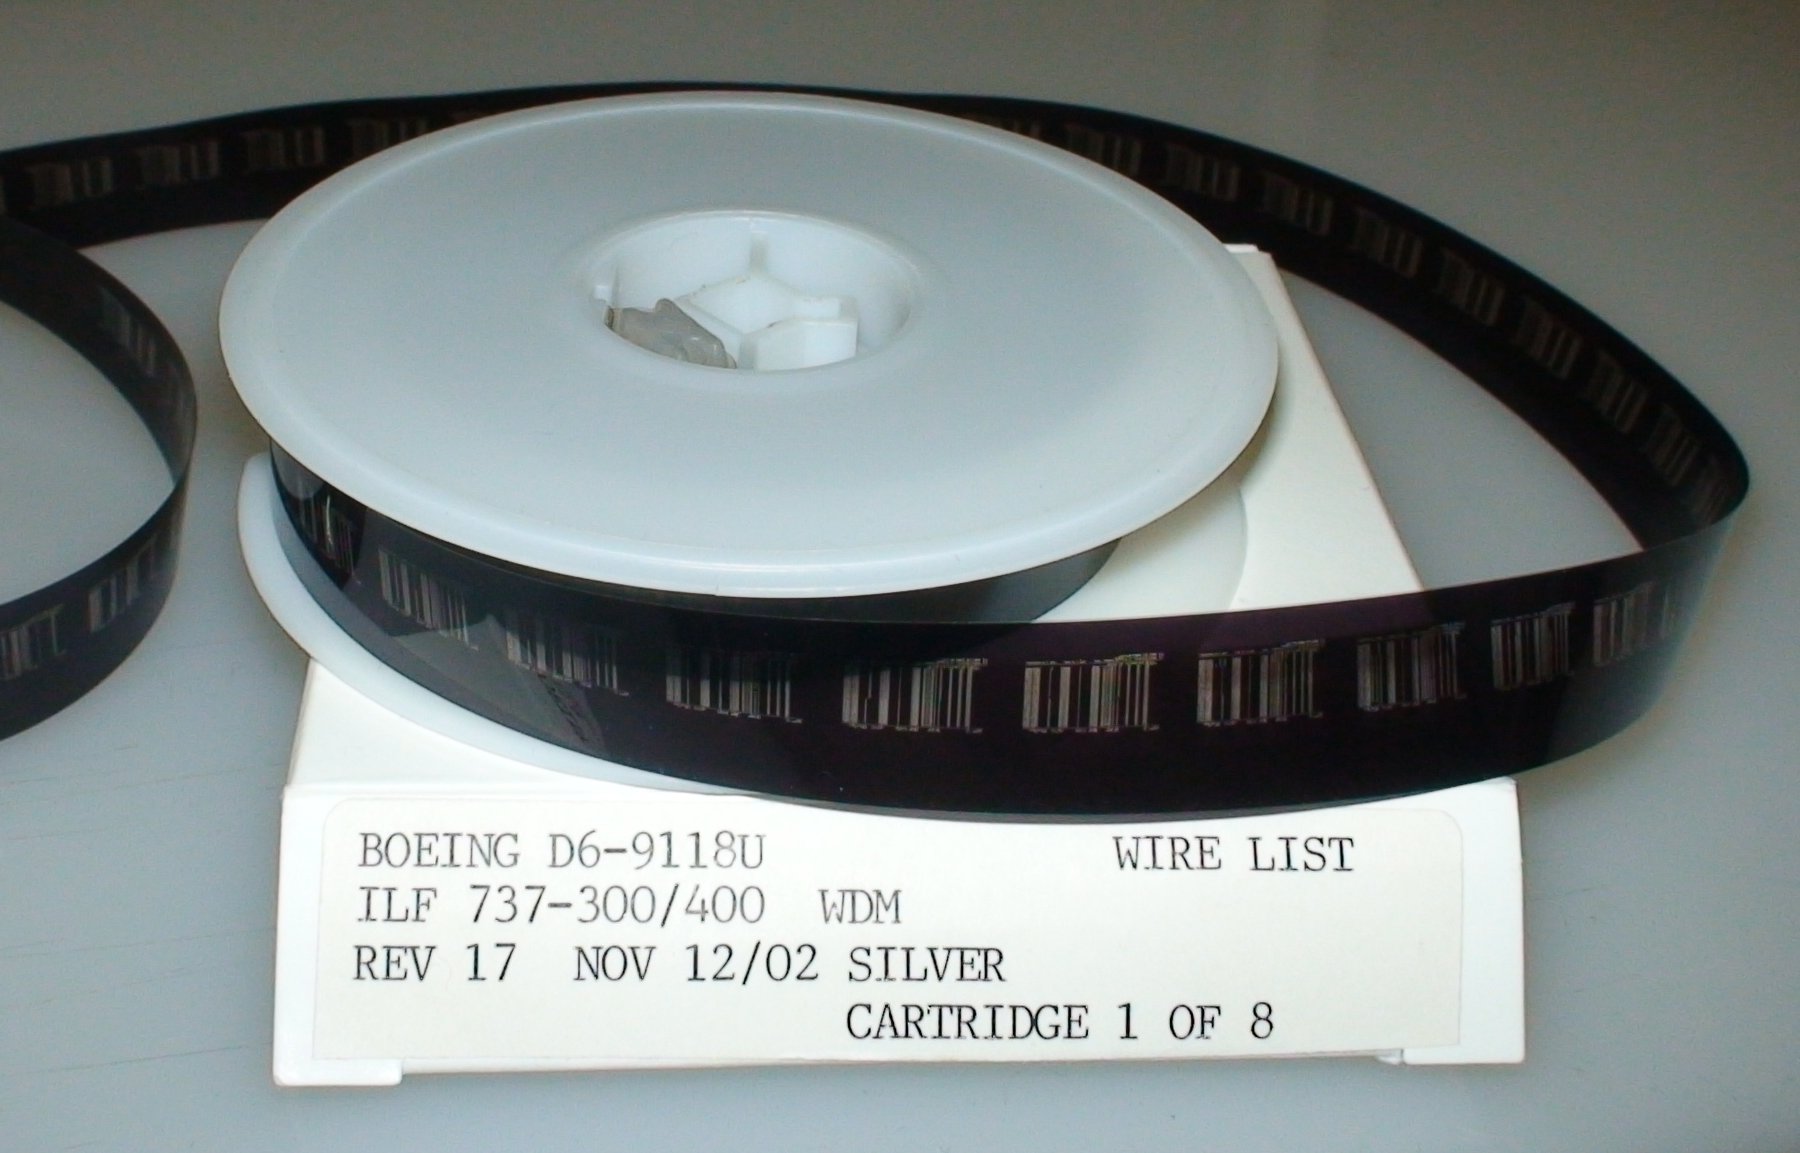 A reel of microfilm